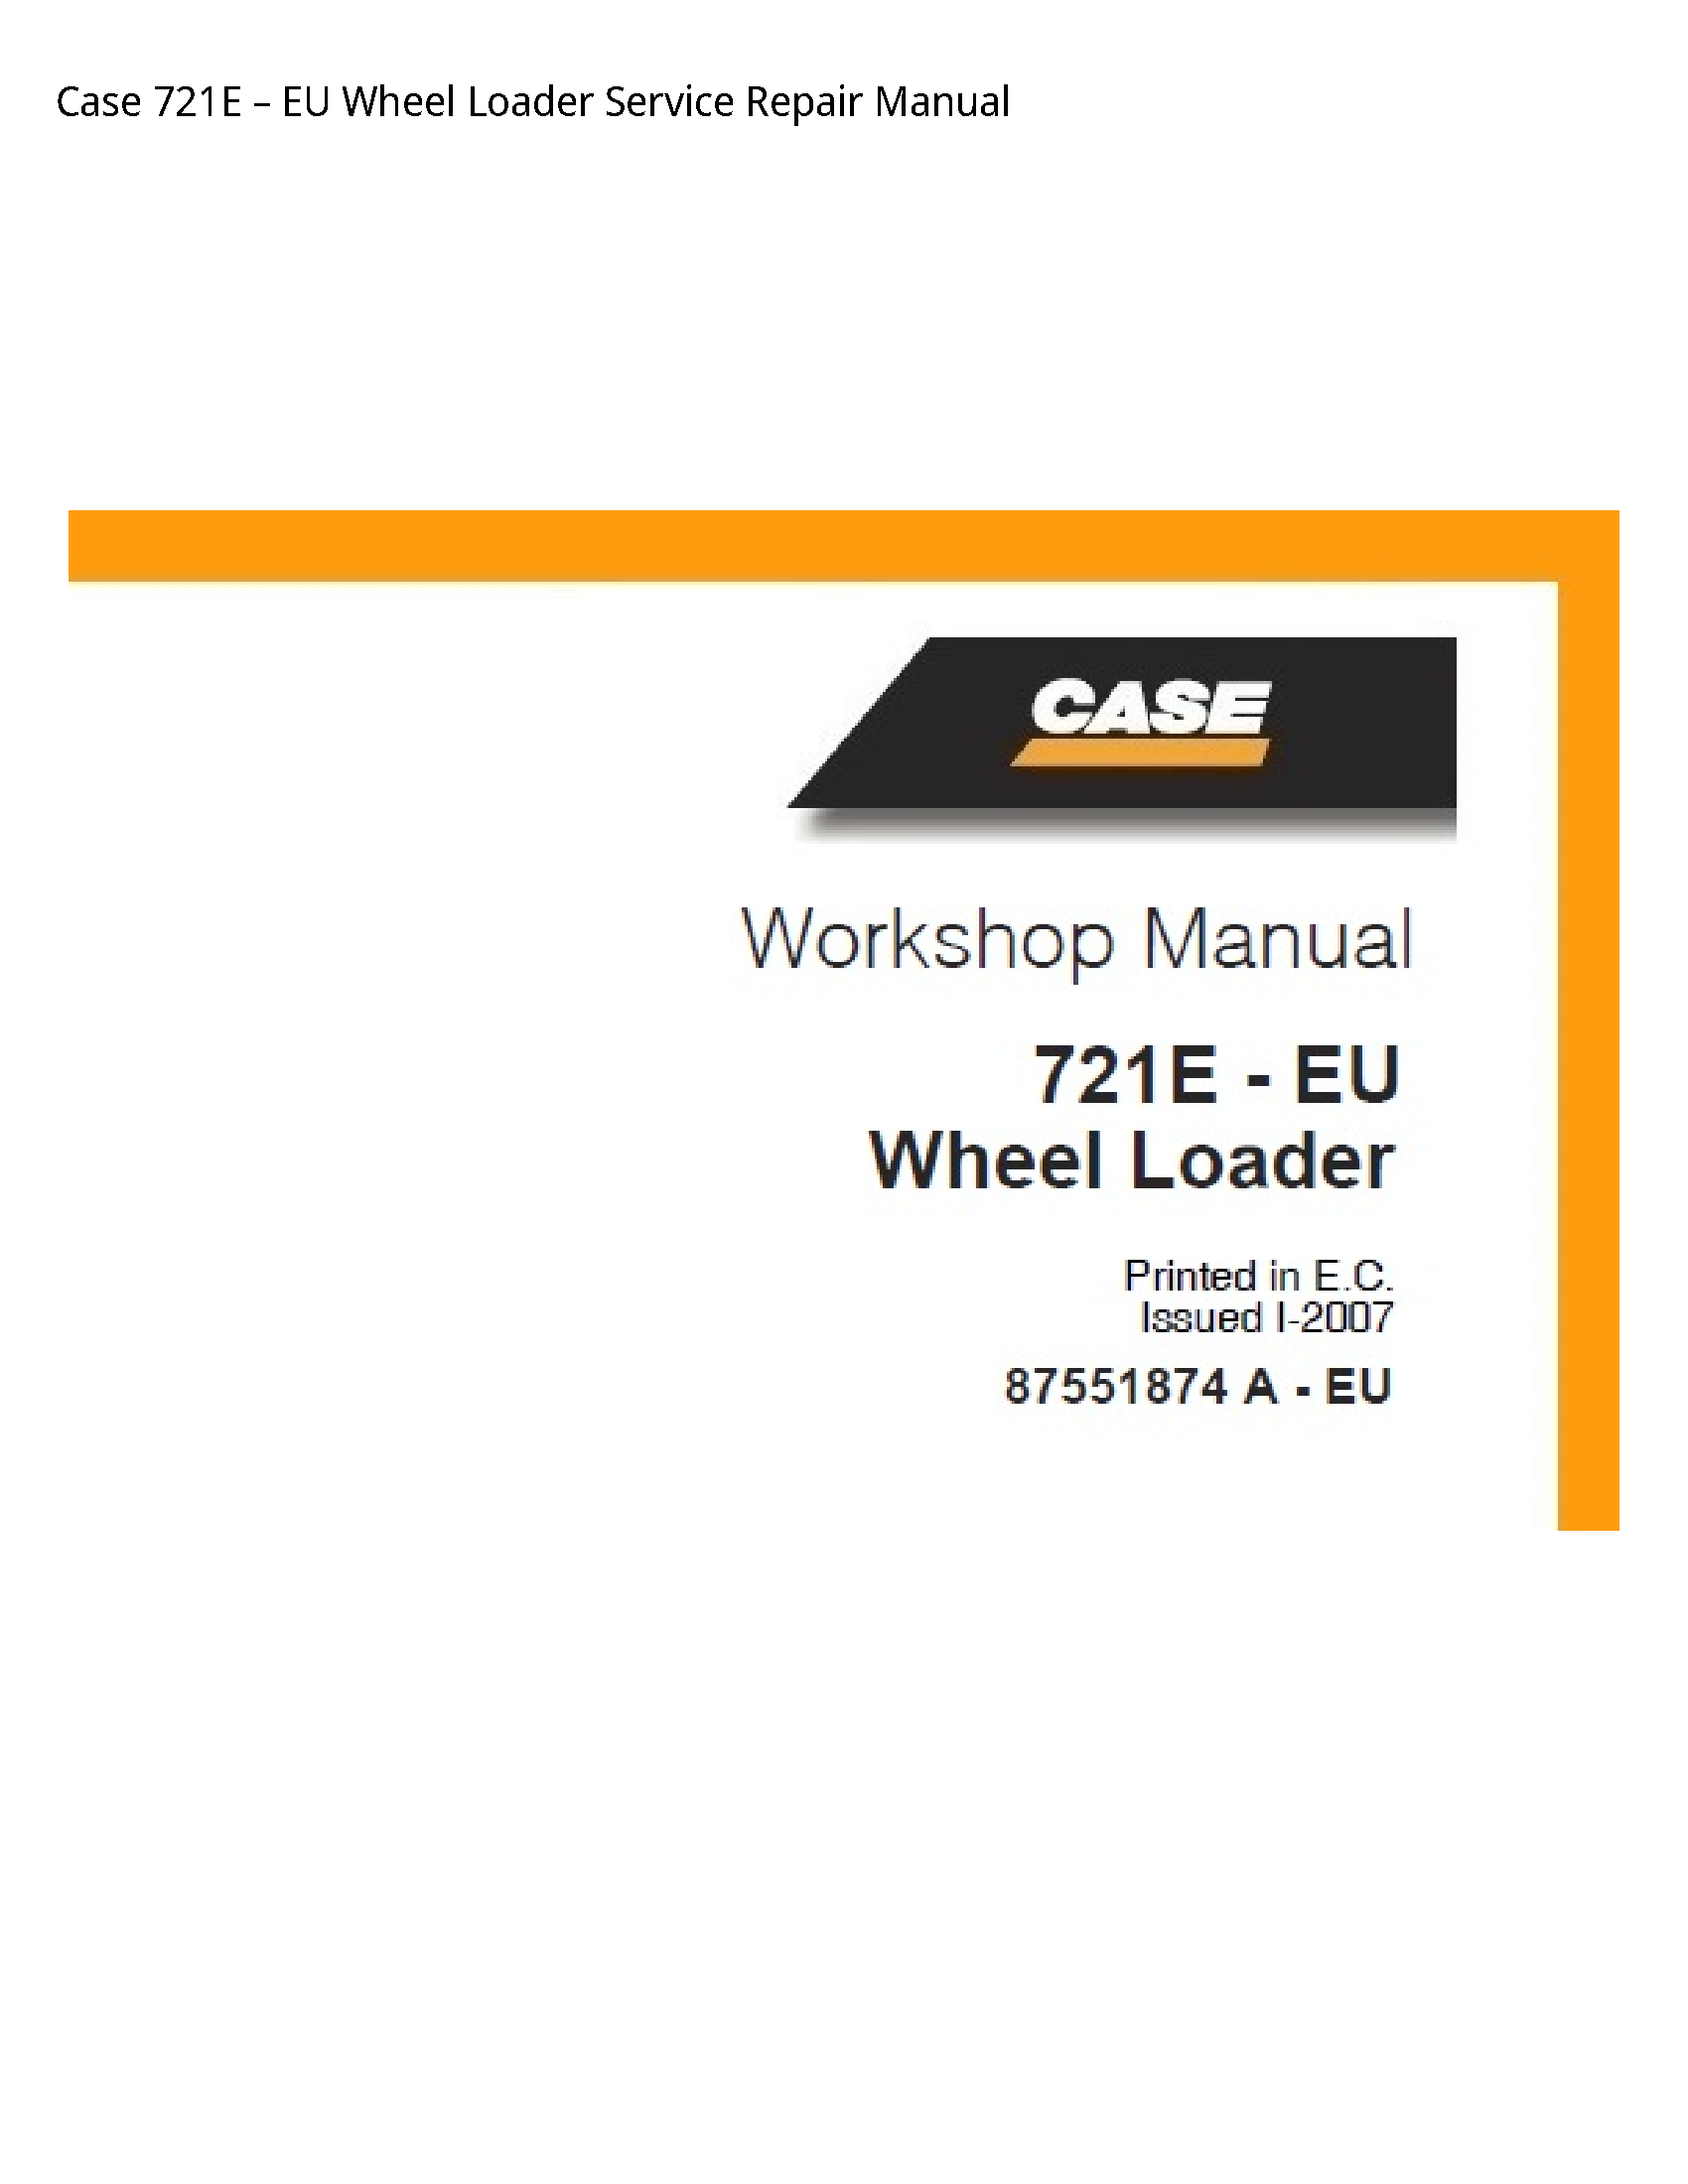 Case/Case IH 721E EU Wheel Loader manual